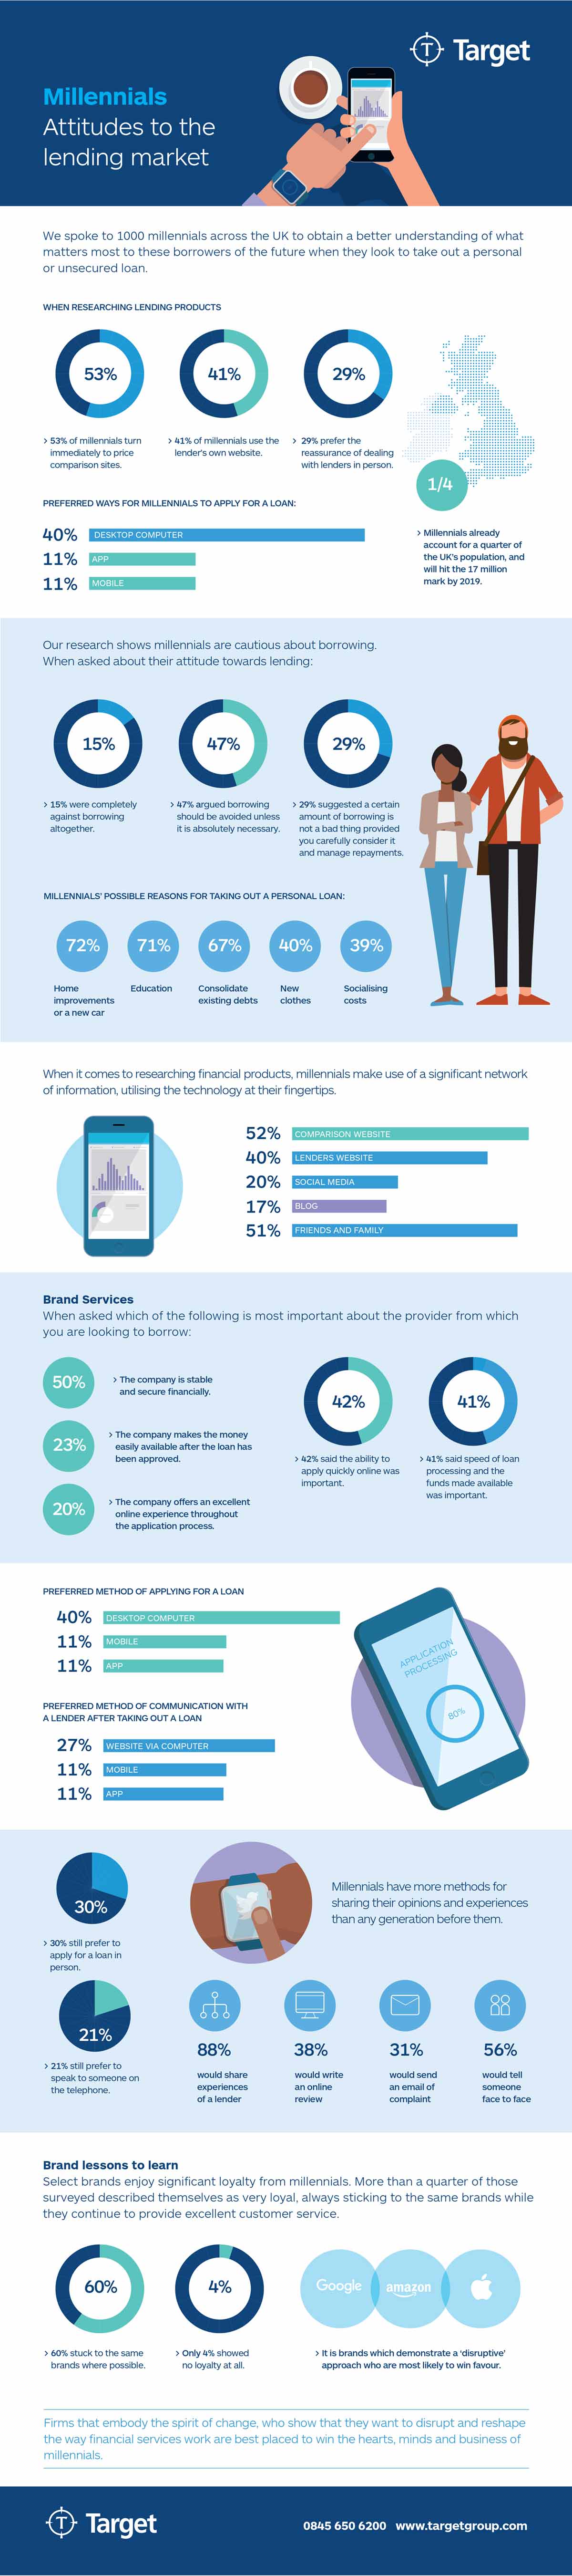 Millennials-attitudes-to-lending-market-infographic-plaza